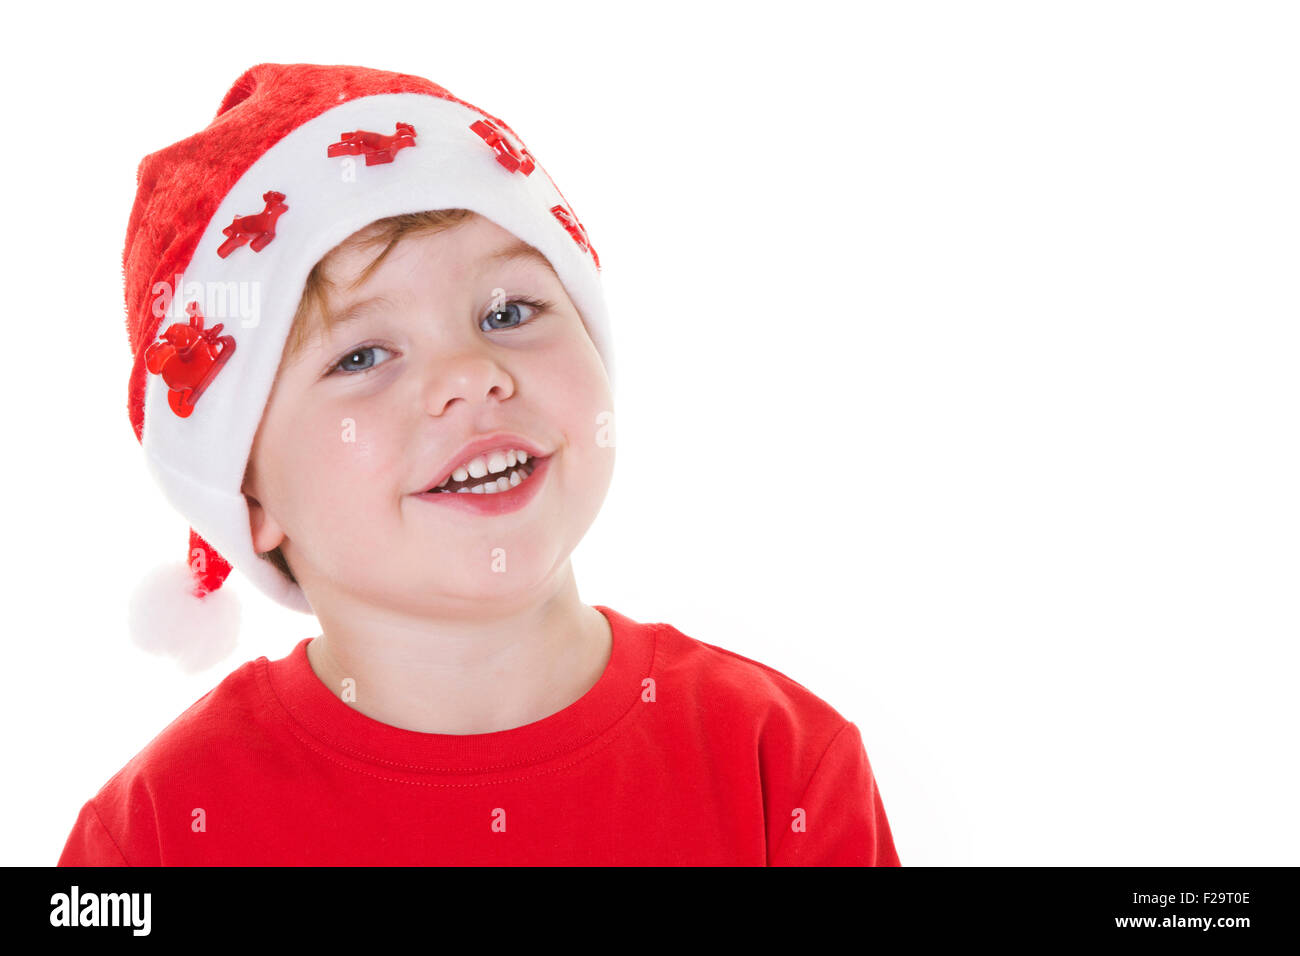 Young boy wearing a Santa hat smiling at the camera. Stock Photo